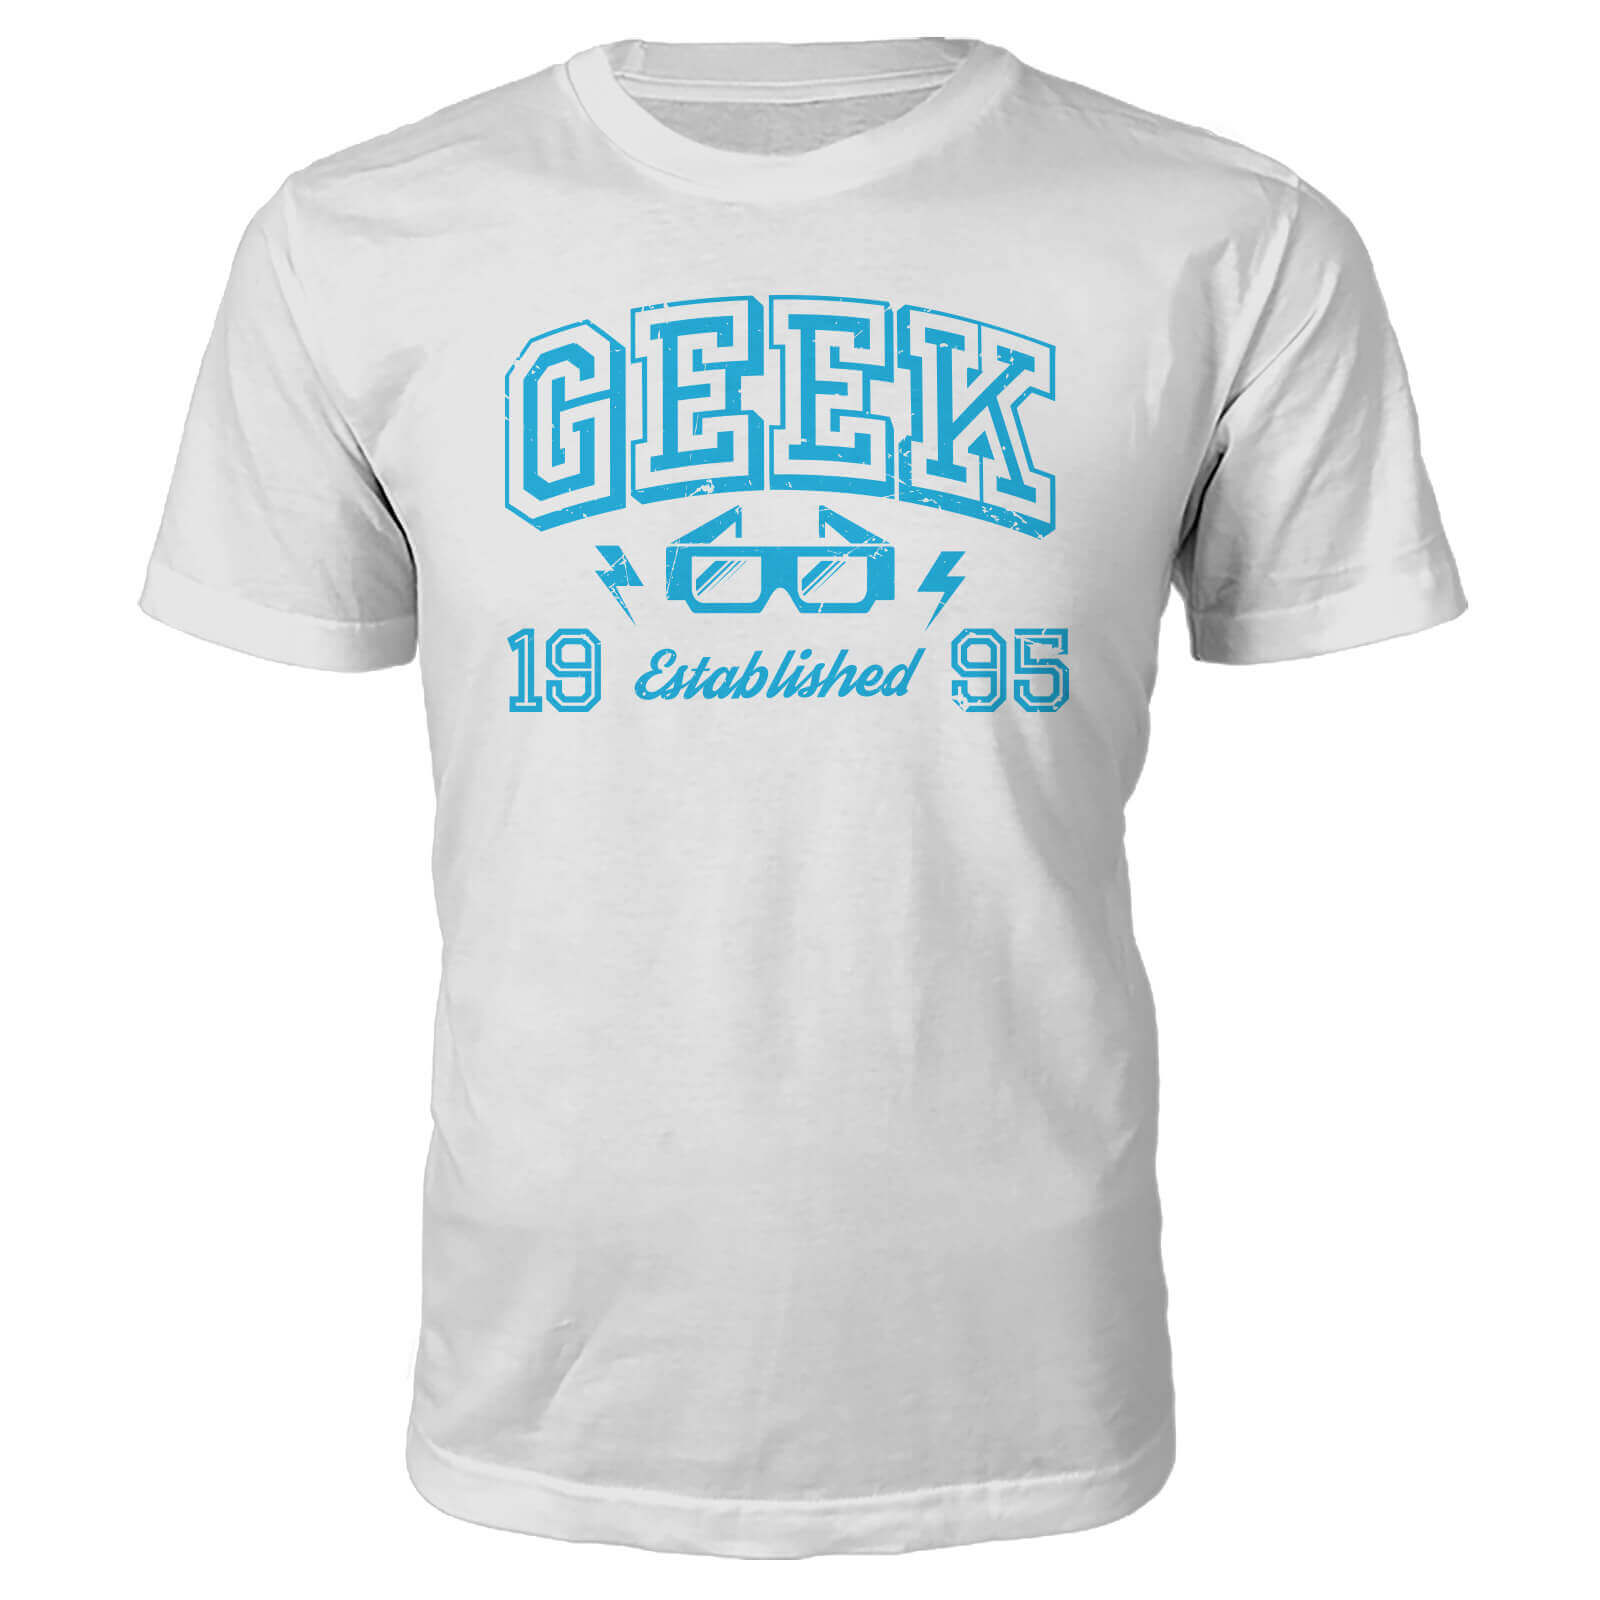 Geek Established 1990's T-Shirt- White - L - 1995